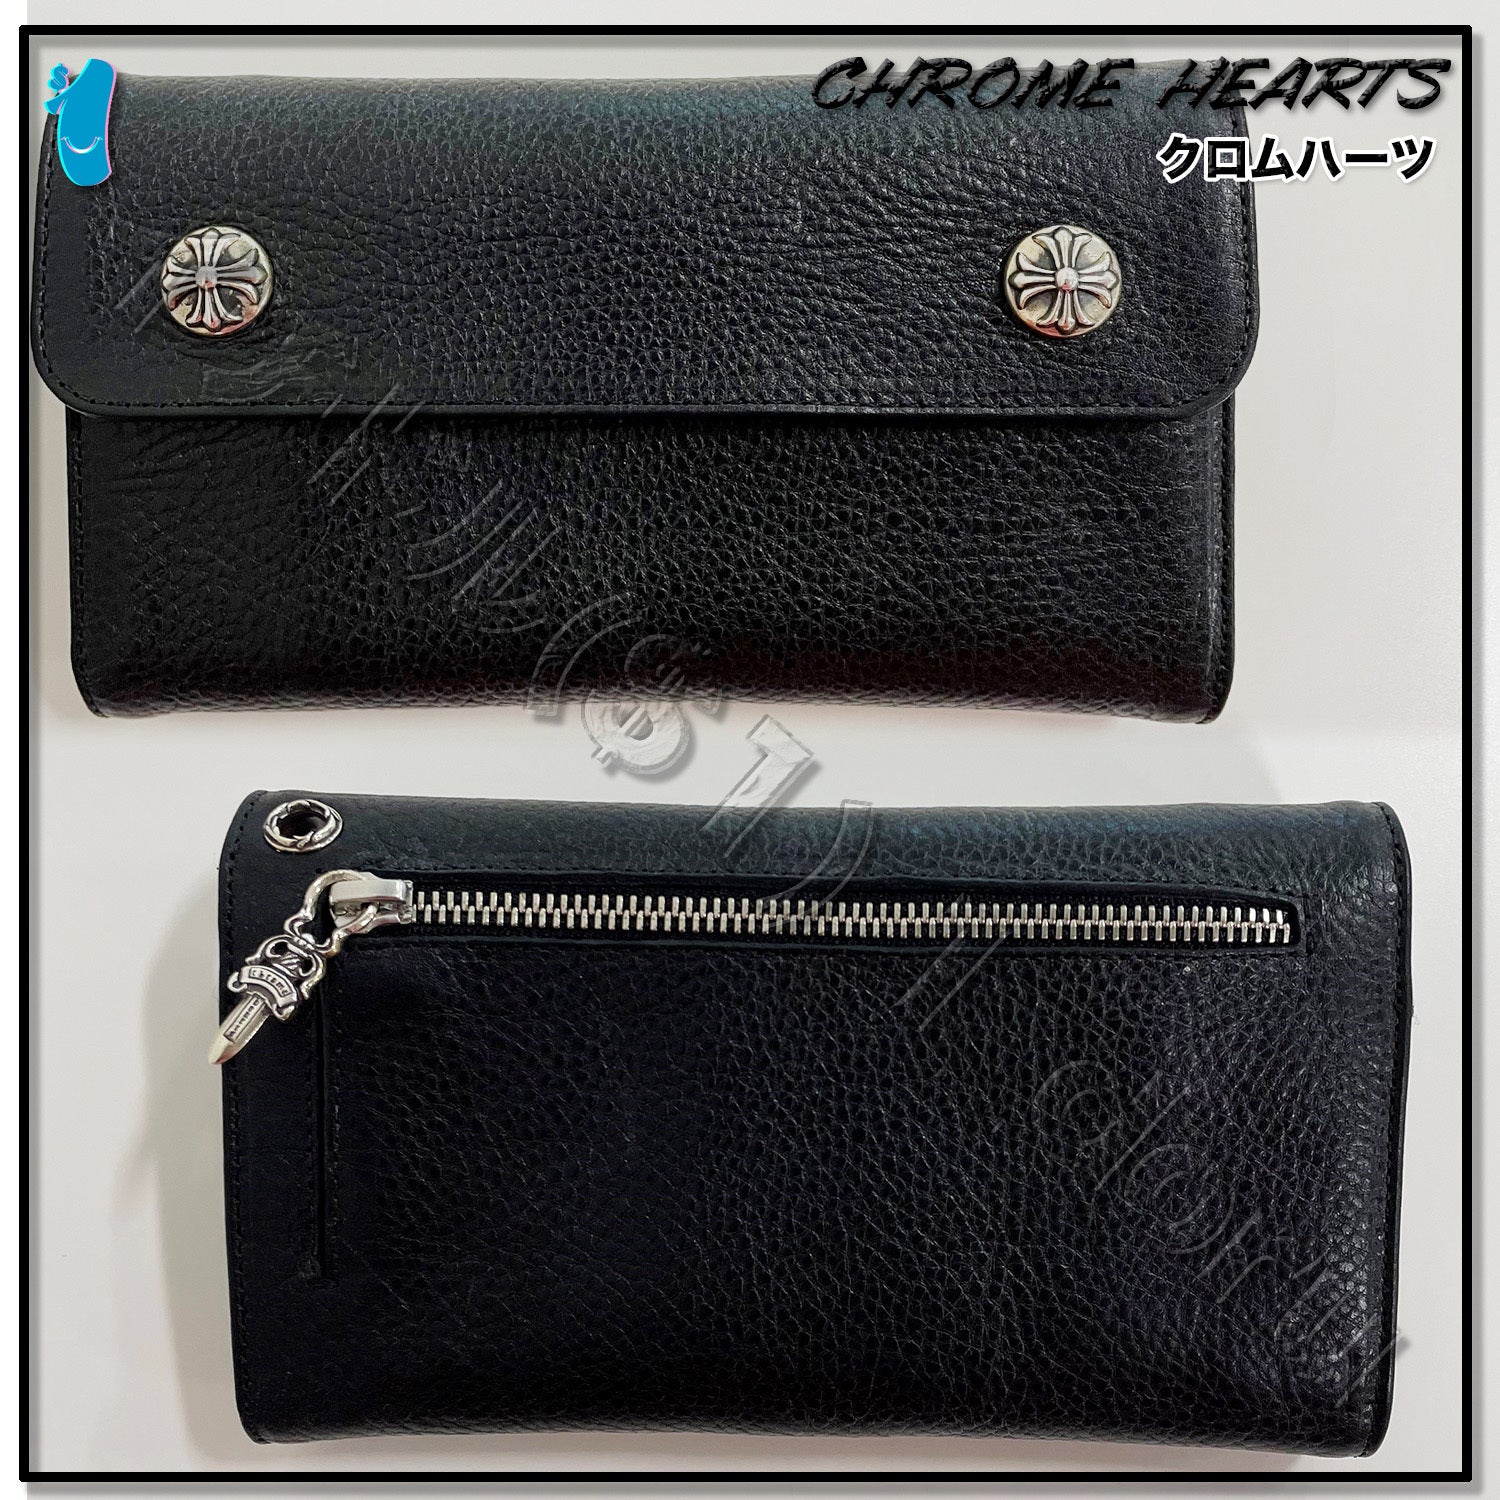 Chrome Hearts Wave Wallet Black Heavy Leather – 1 doru